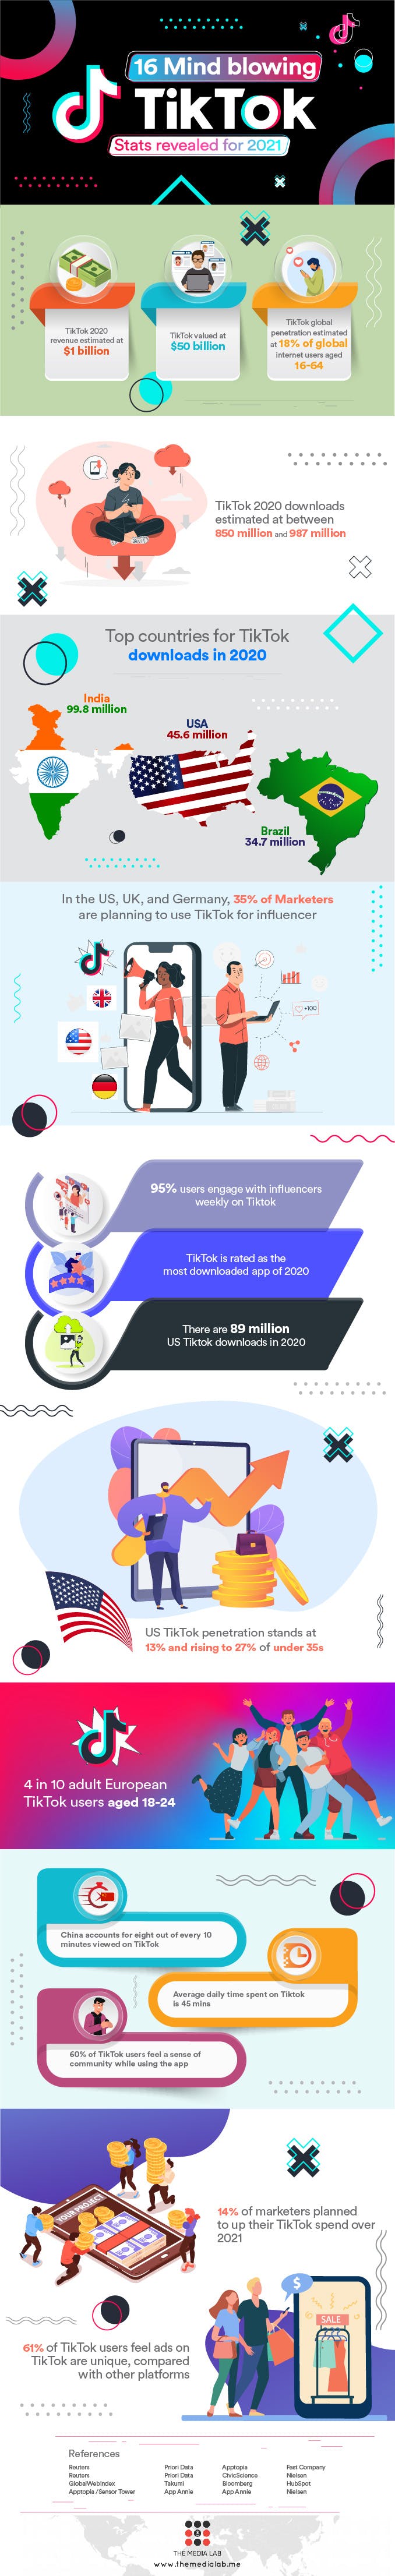 infographic for TikTok stats 2021